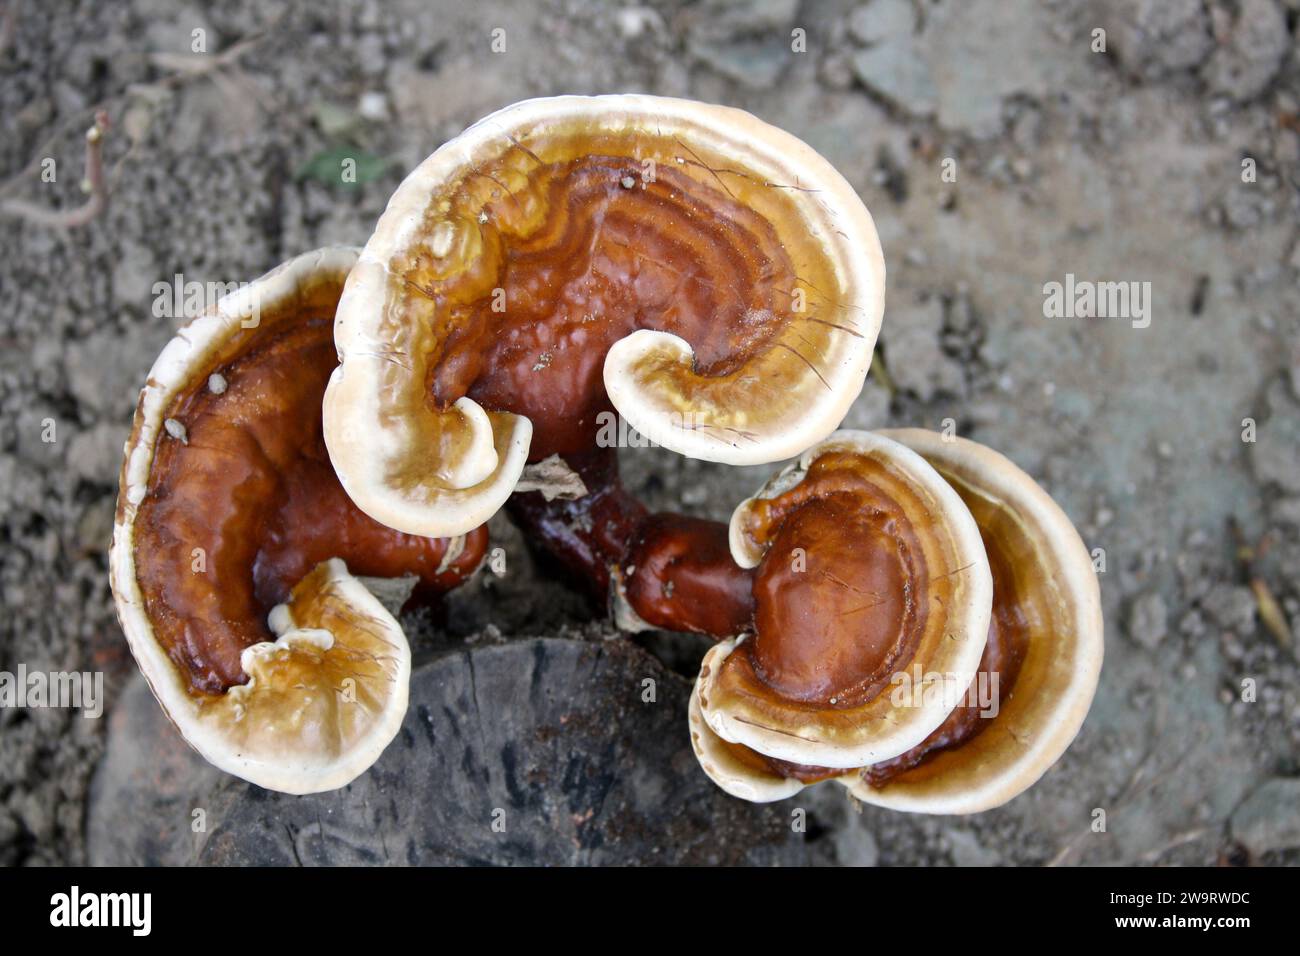 Lingzhi or Reishi mushrooms (Ganoderma lucidum) growing on a dead tree stump : (pix Sanjiv Shukla) Stock Photo